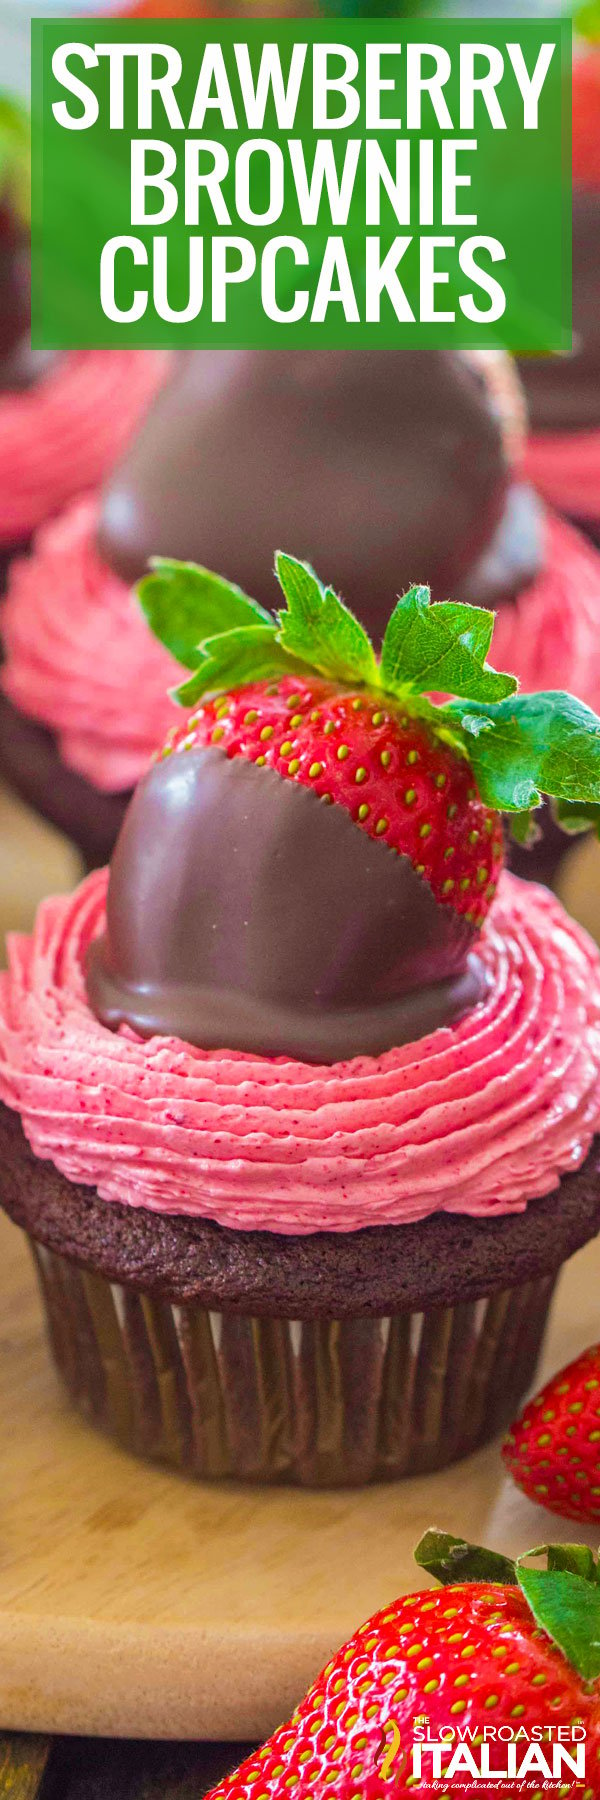 strawberry brownie cupcakes -pin